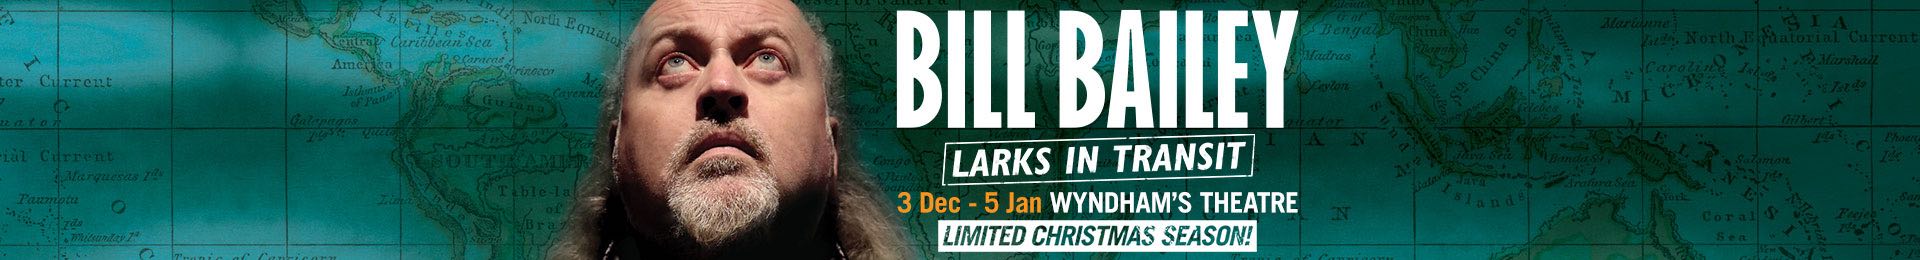 Bill Bailey: Larks In Transit banner image